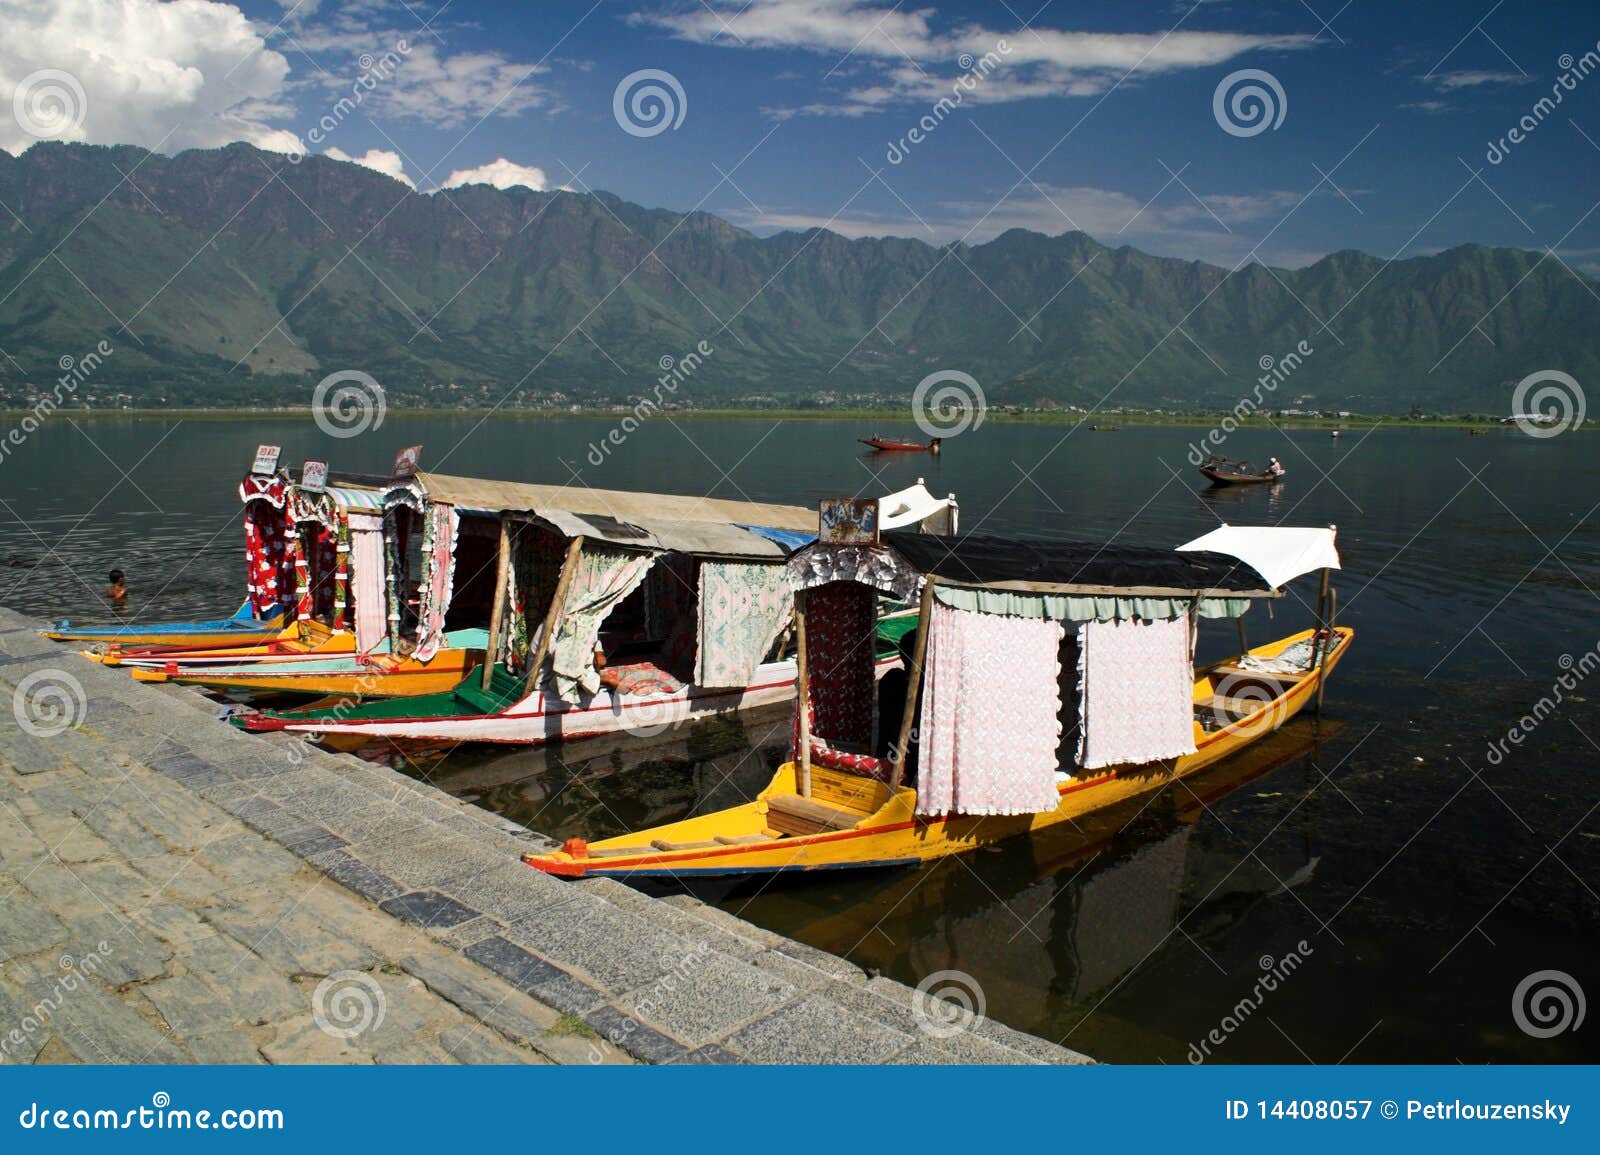 srinagar and dal lake in indian kashmir